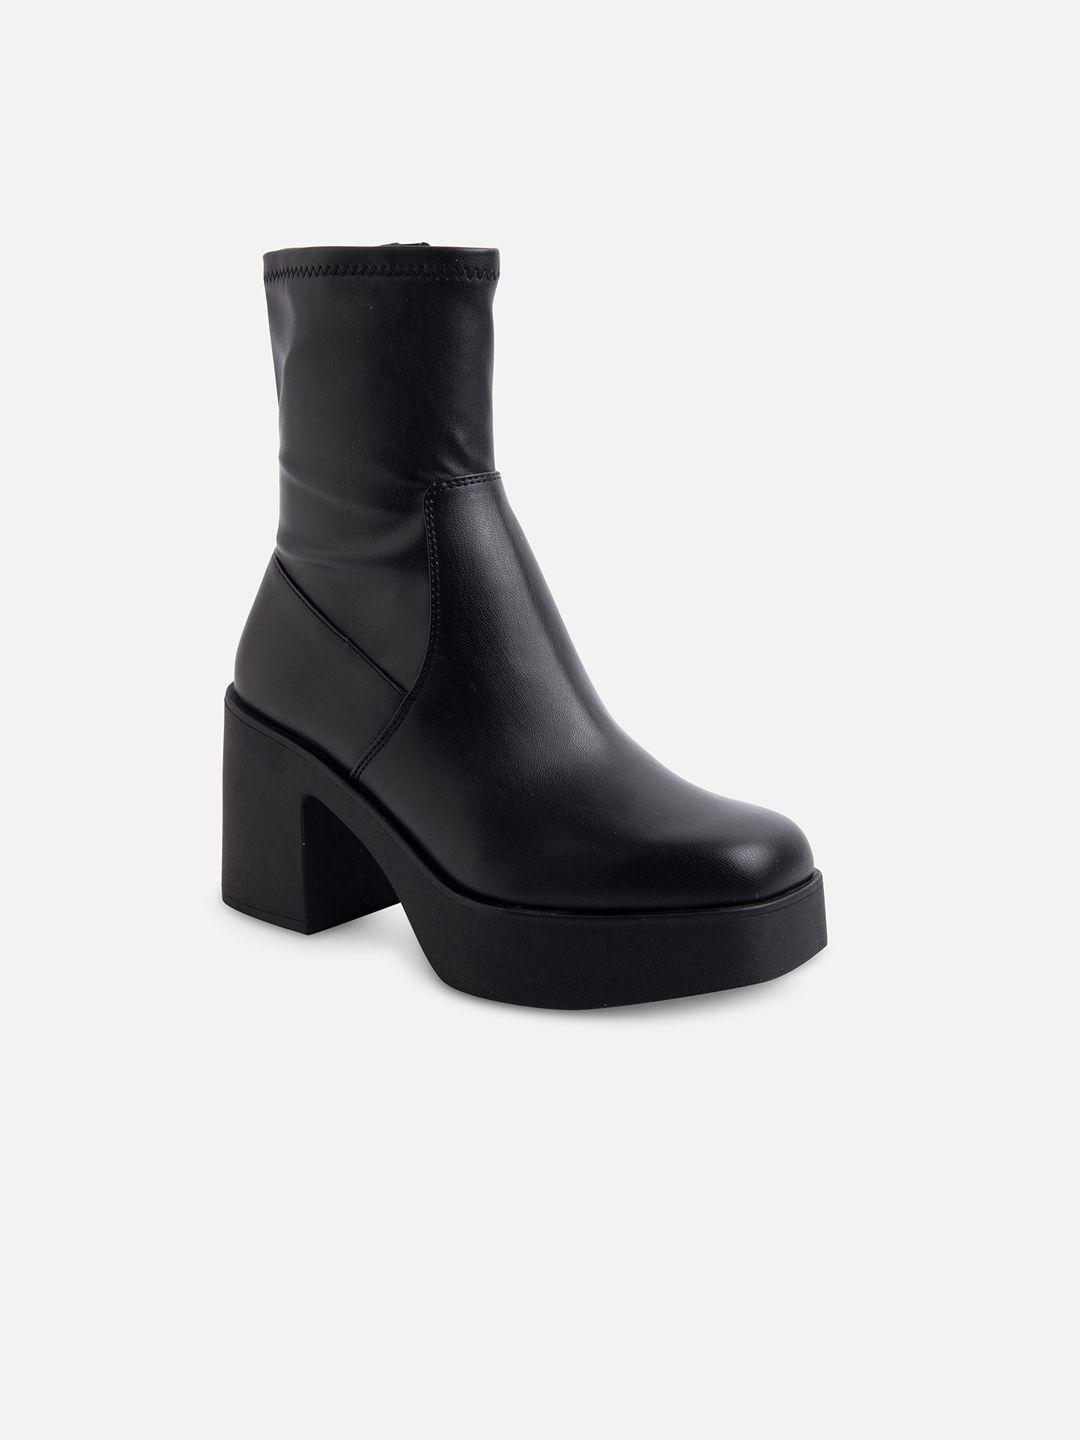 aldo-women-black-solid-leather-zip-up-boots